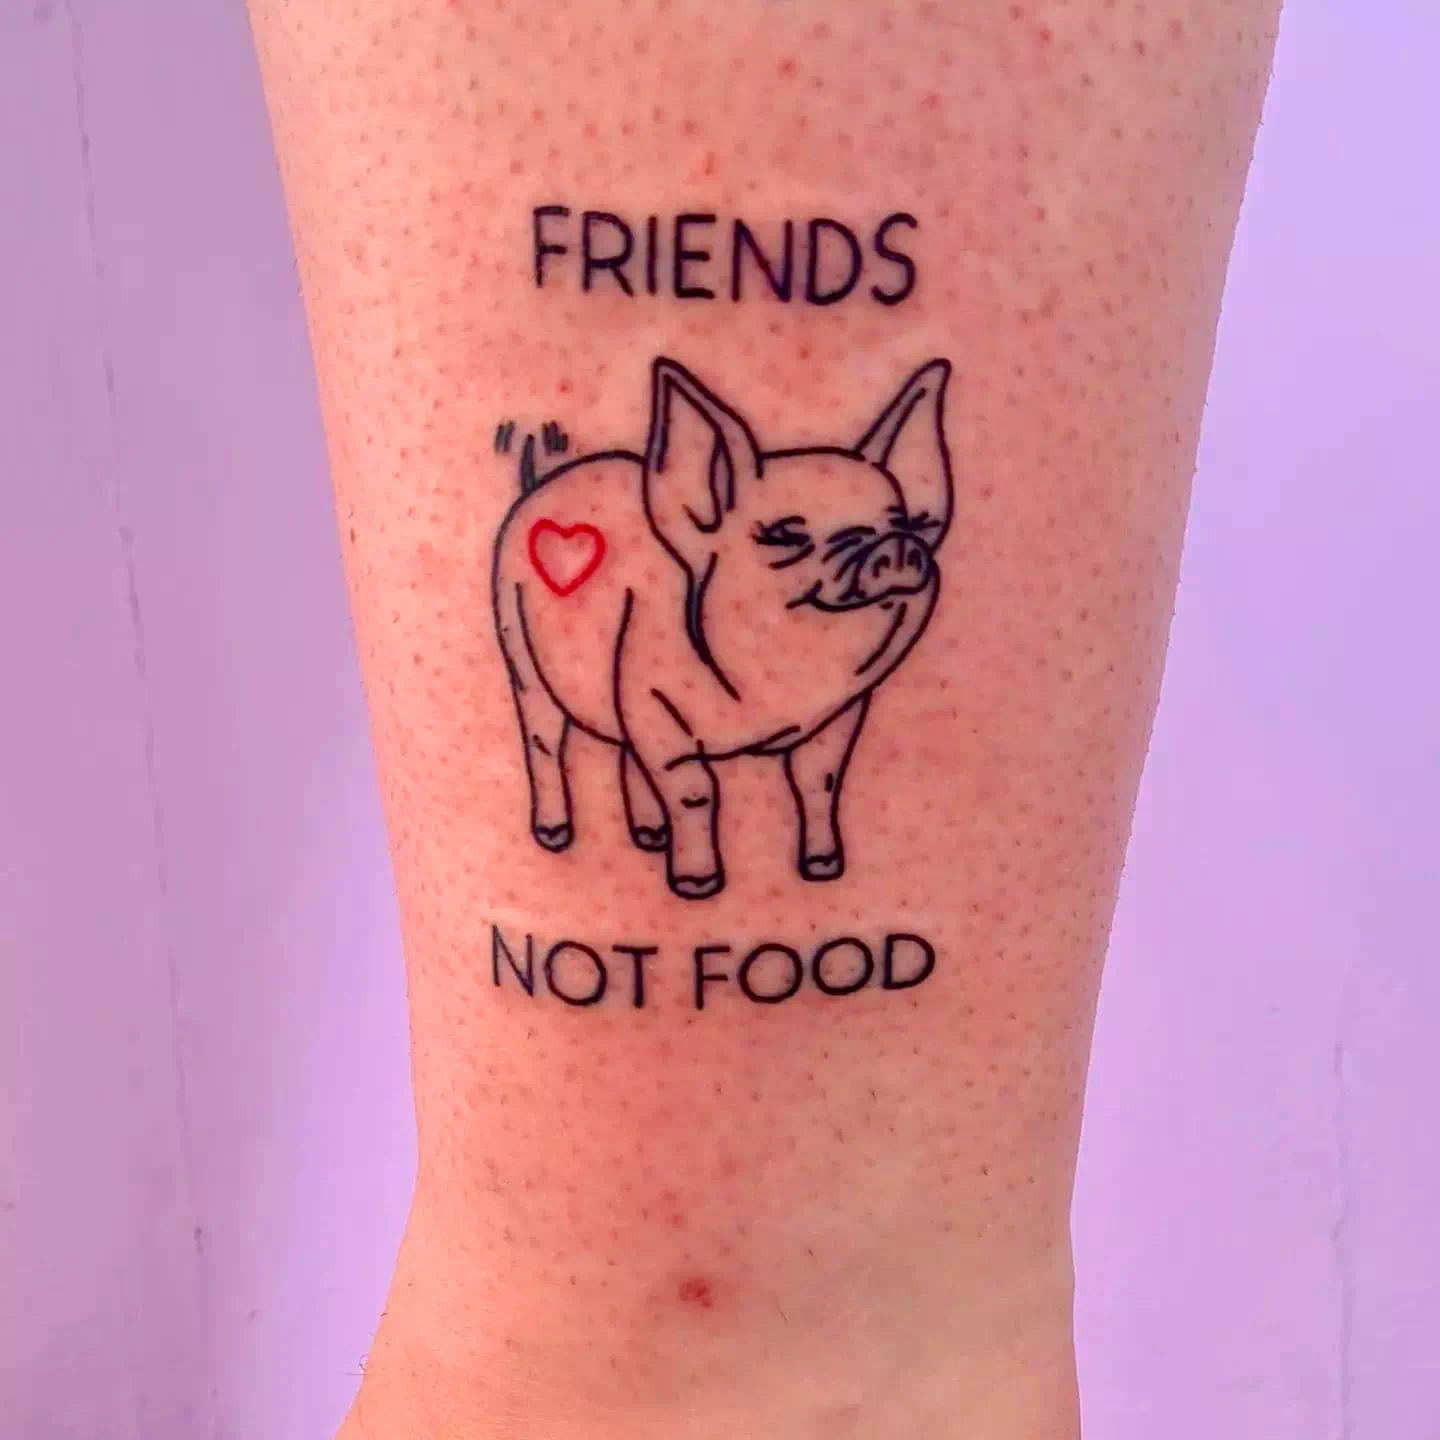 Tatuaje inspirado en el cerdo de la pulsera